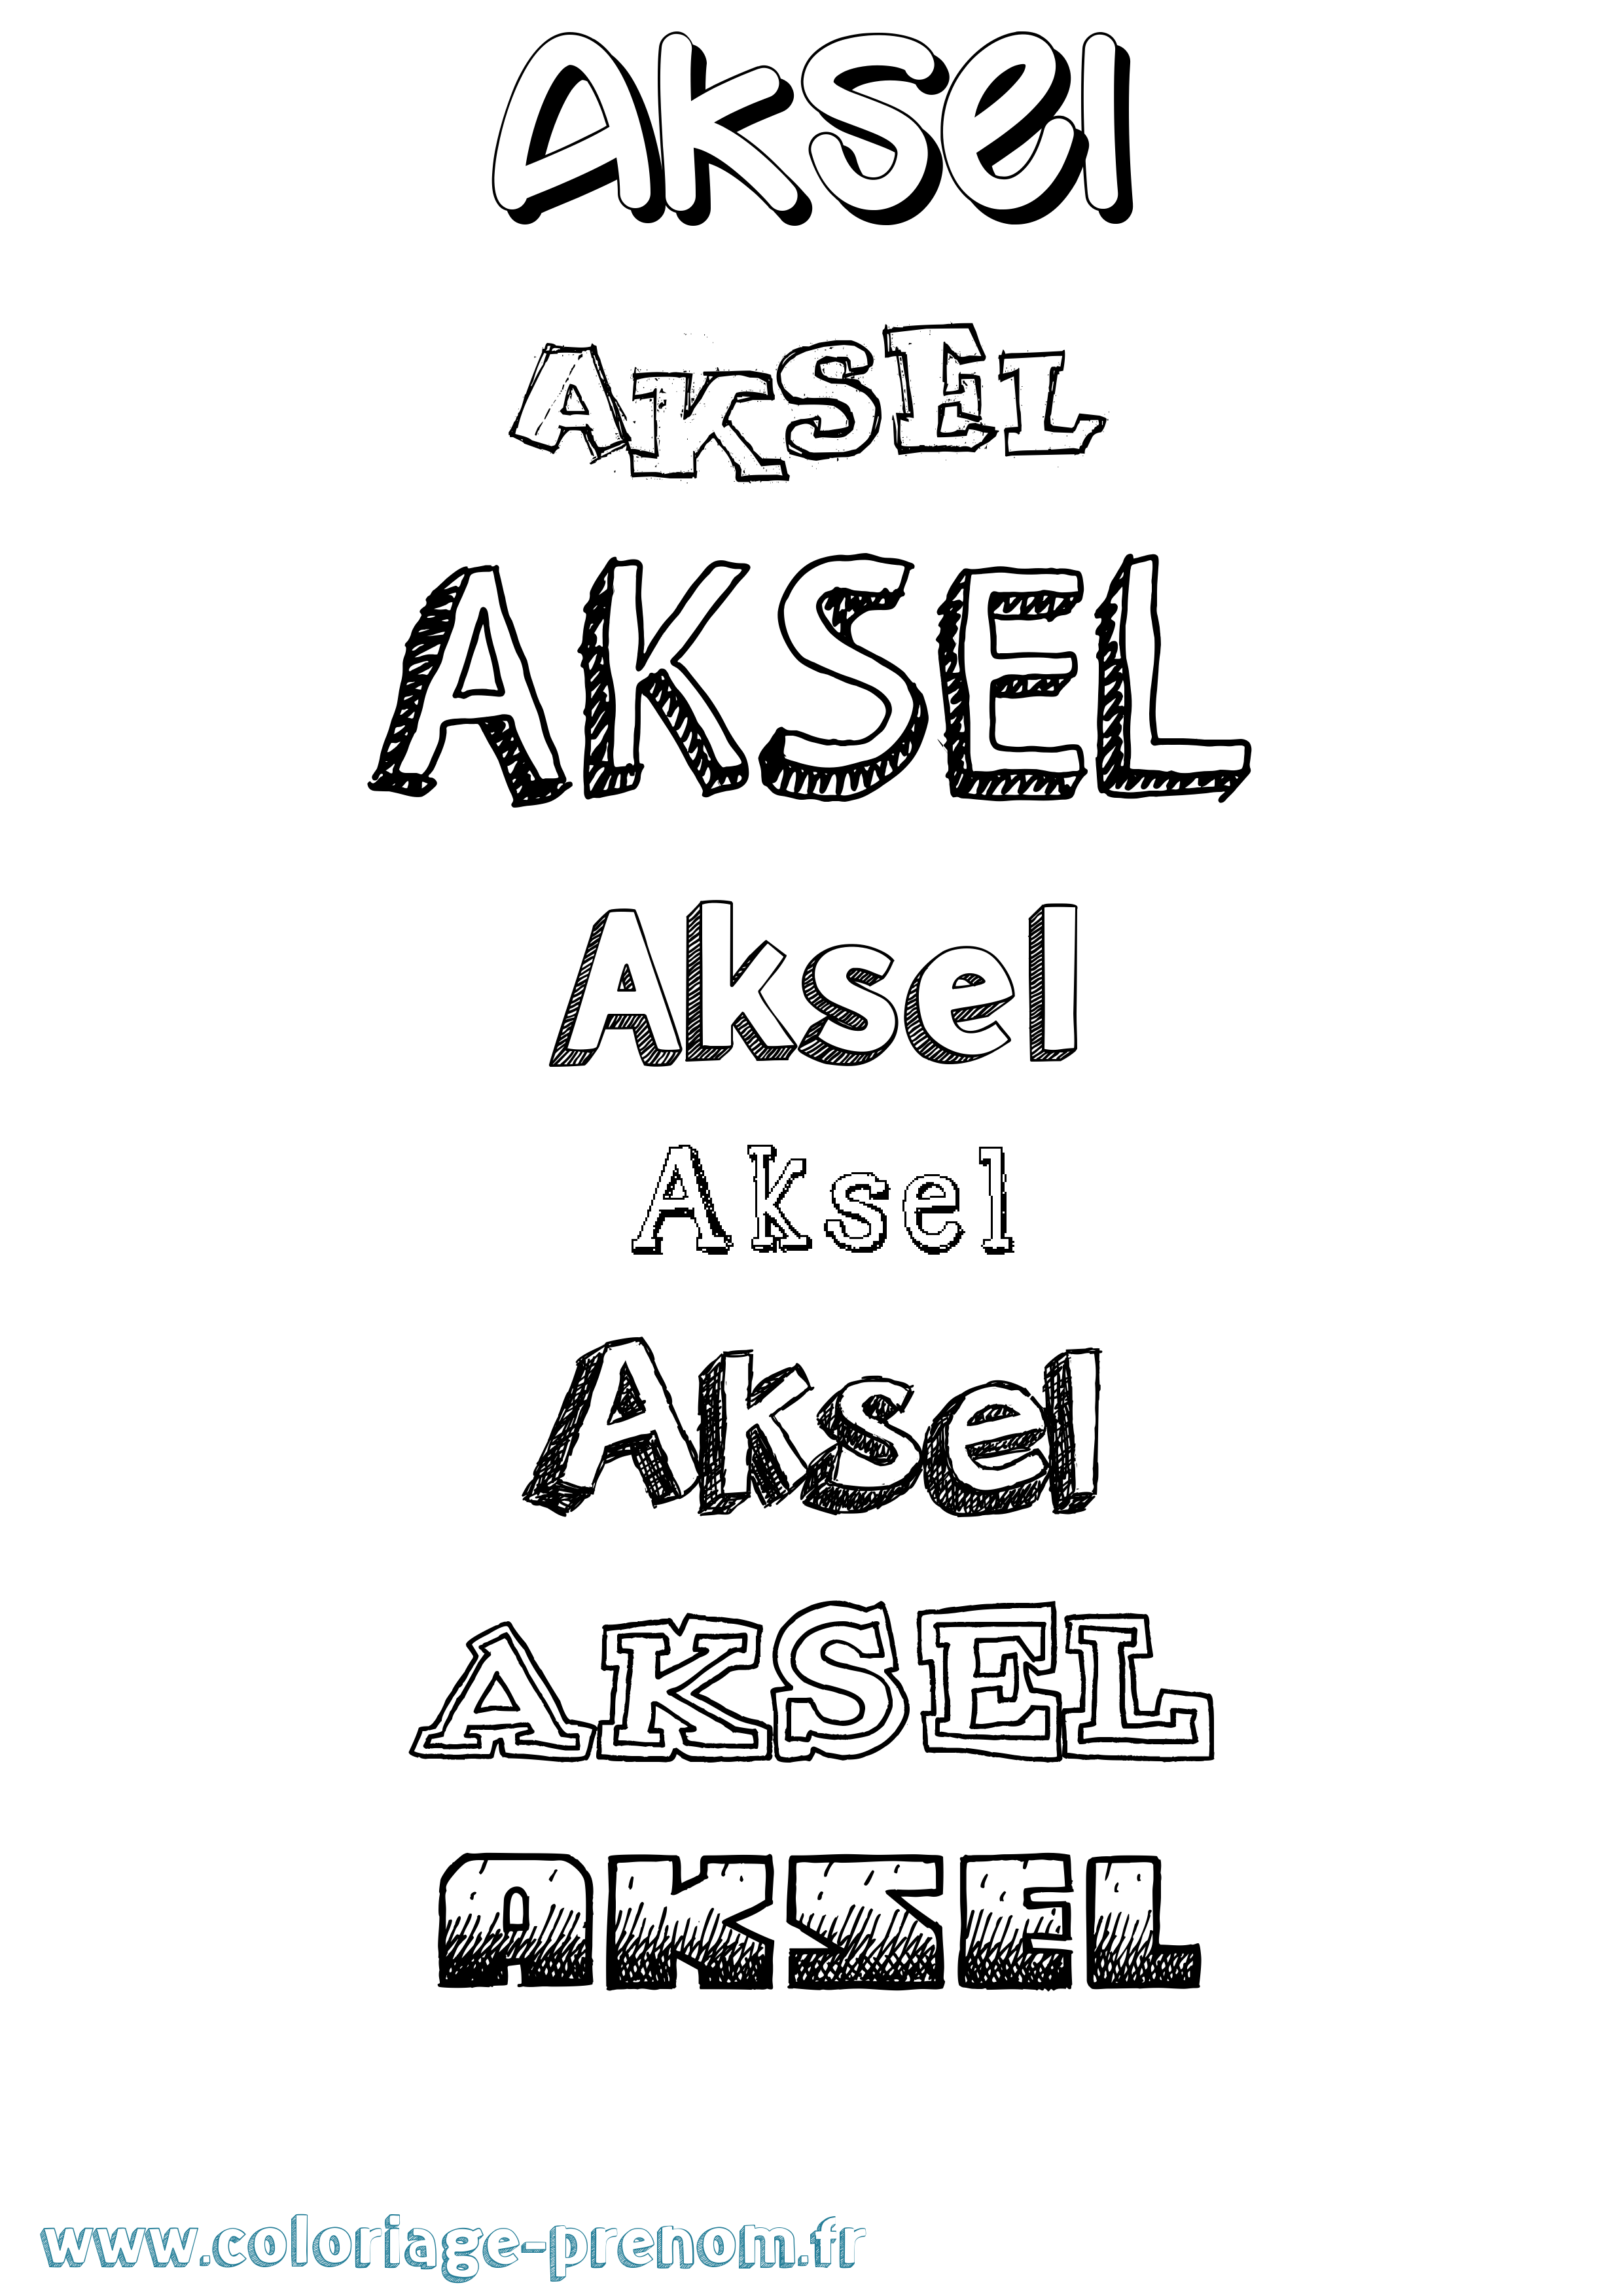 Coloriage prénom Aksel Dessiné